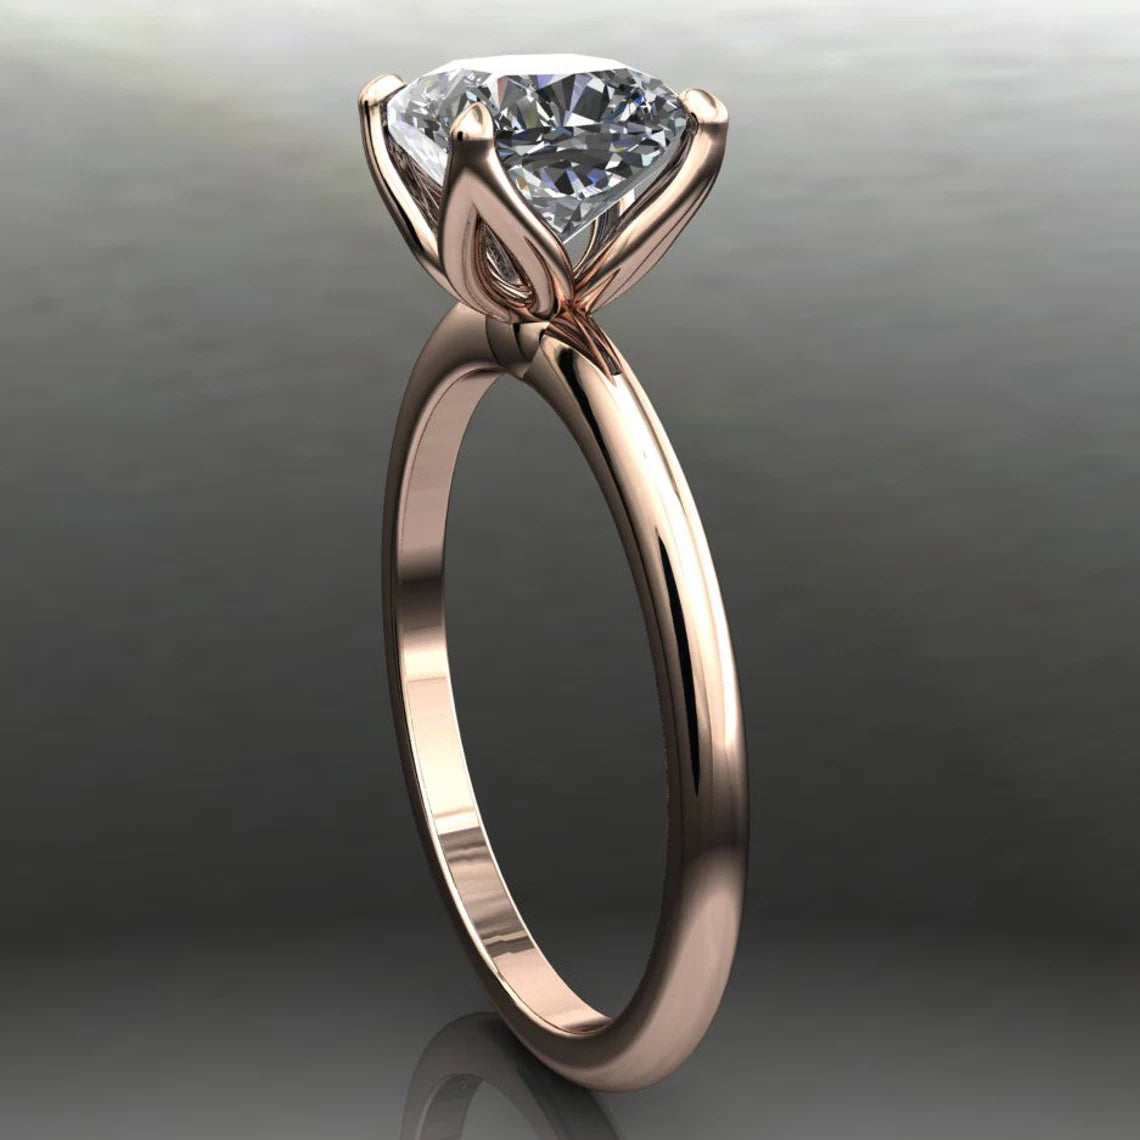 natalie ring - 1.7 carat cushion cut NEO moissanite engagement ring - J Hollywood Designs